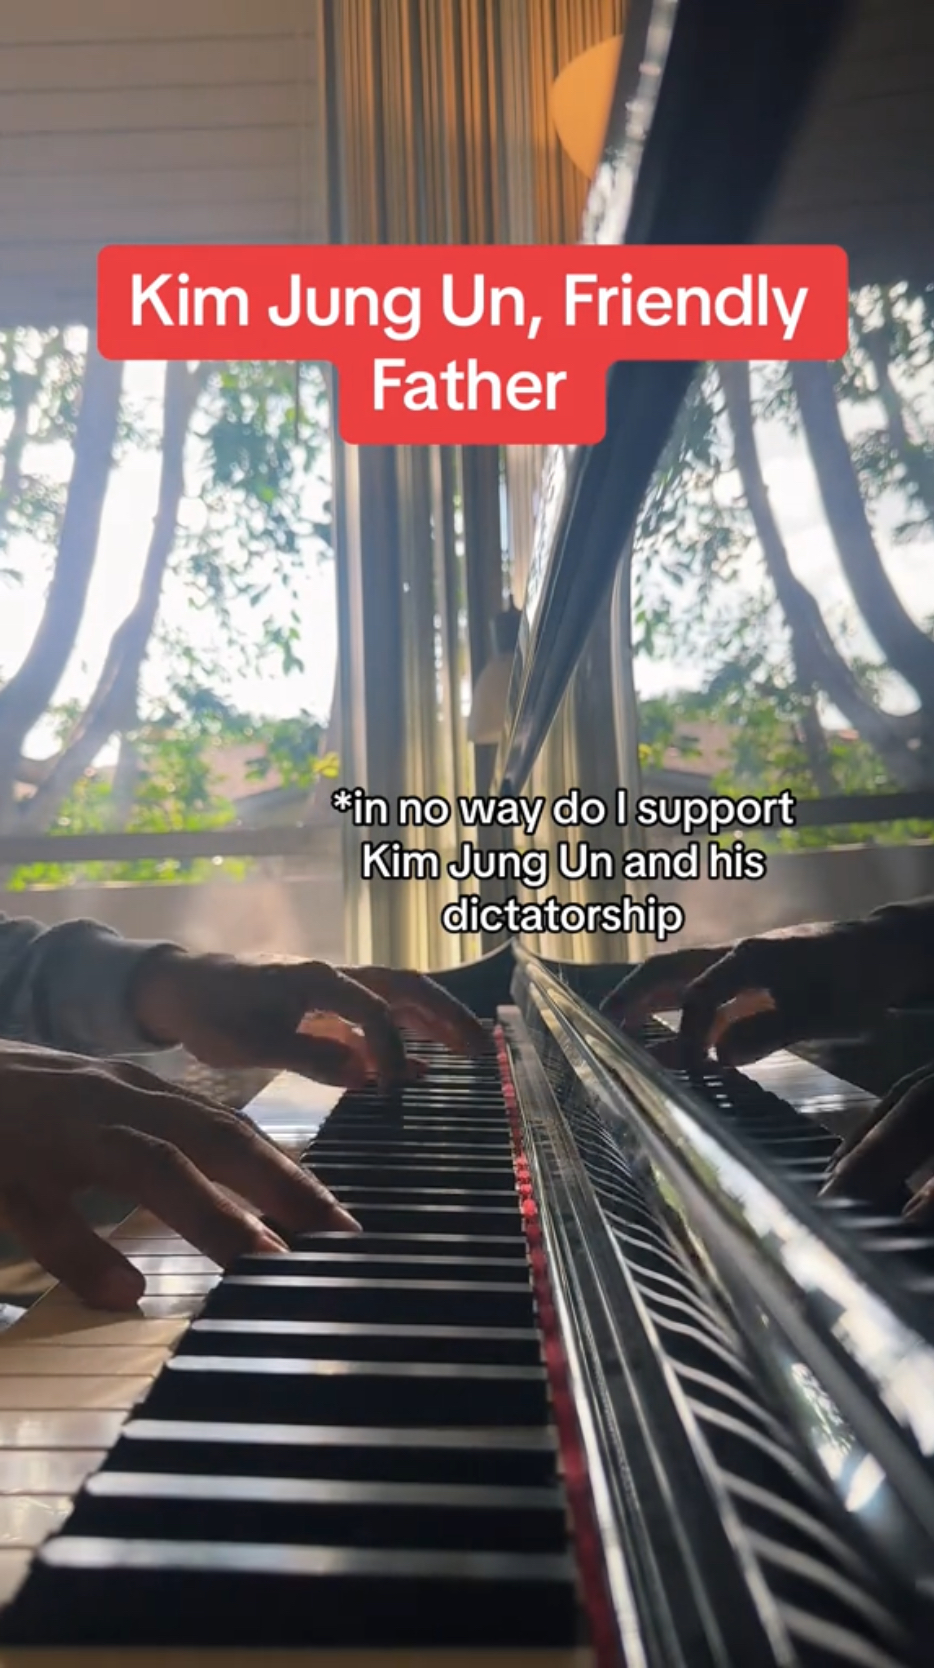 TikTok用戶鋼琴演奏歌頌金正恩的歌曲《友善的父親》，還表明不是支持金正恩或其政權。